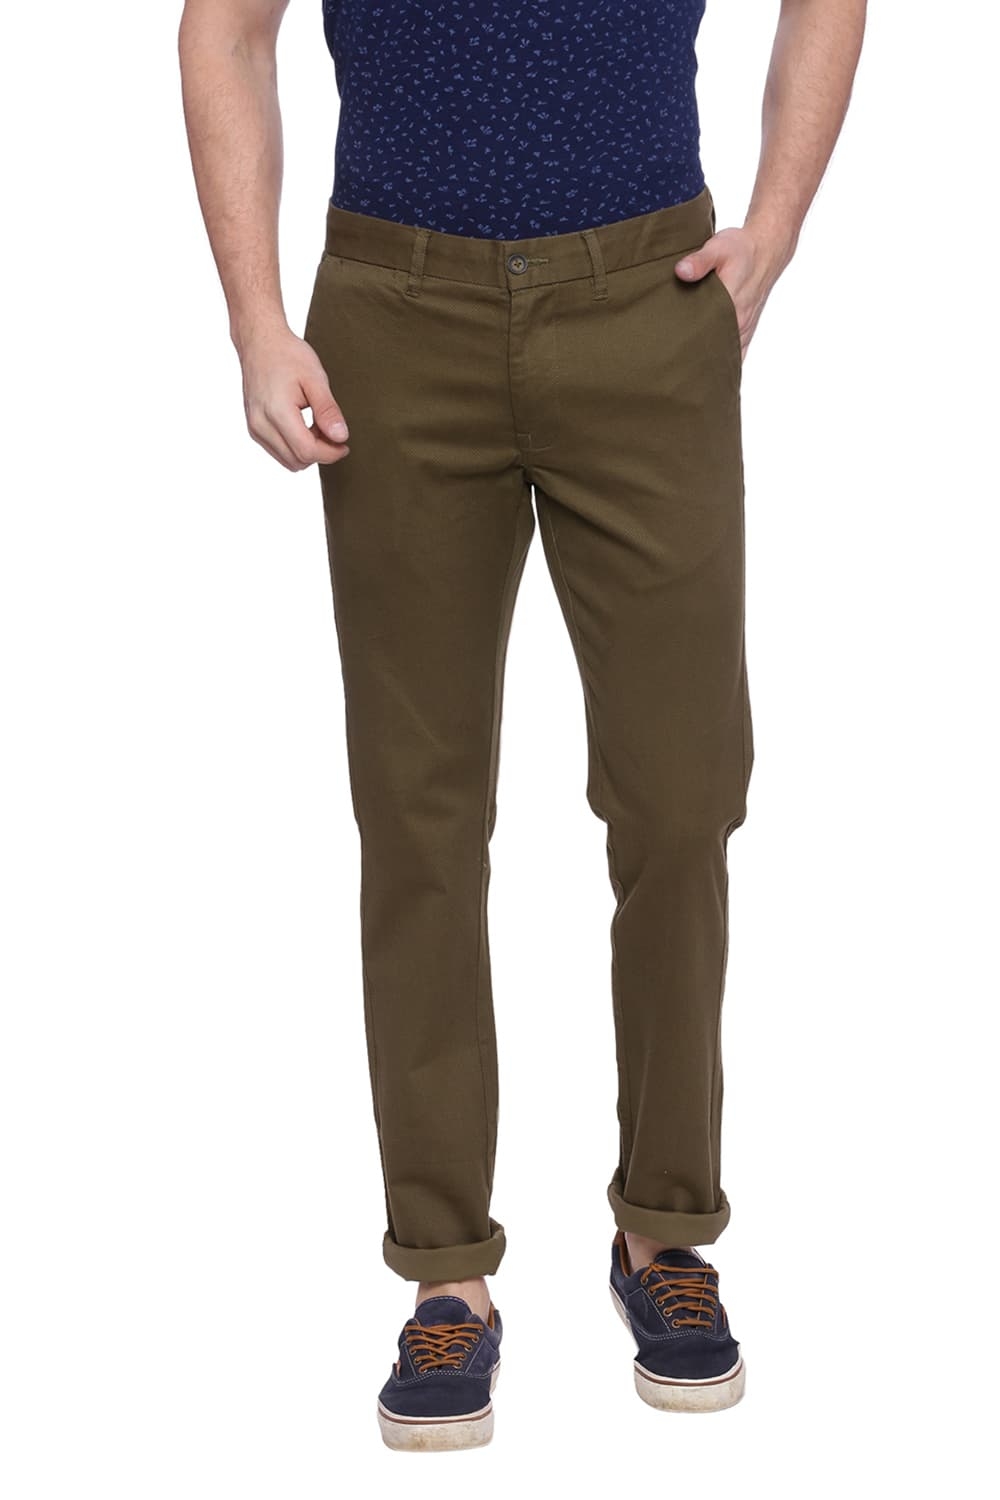 Basics | Basics Skinny Fit Military Gray Printed Stretch Trouser